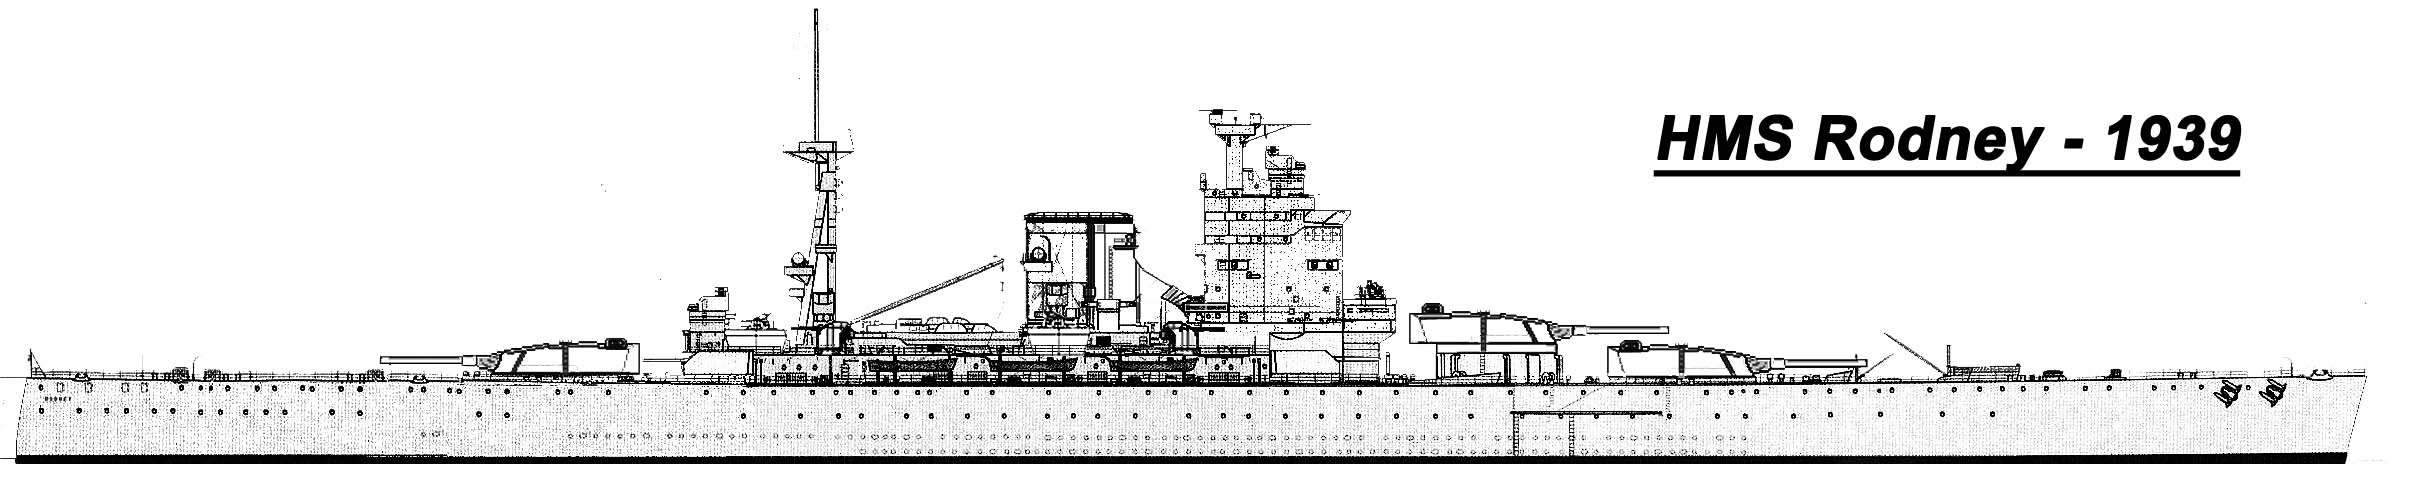 hms-rodney-1939-battleship.jpg